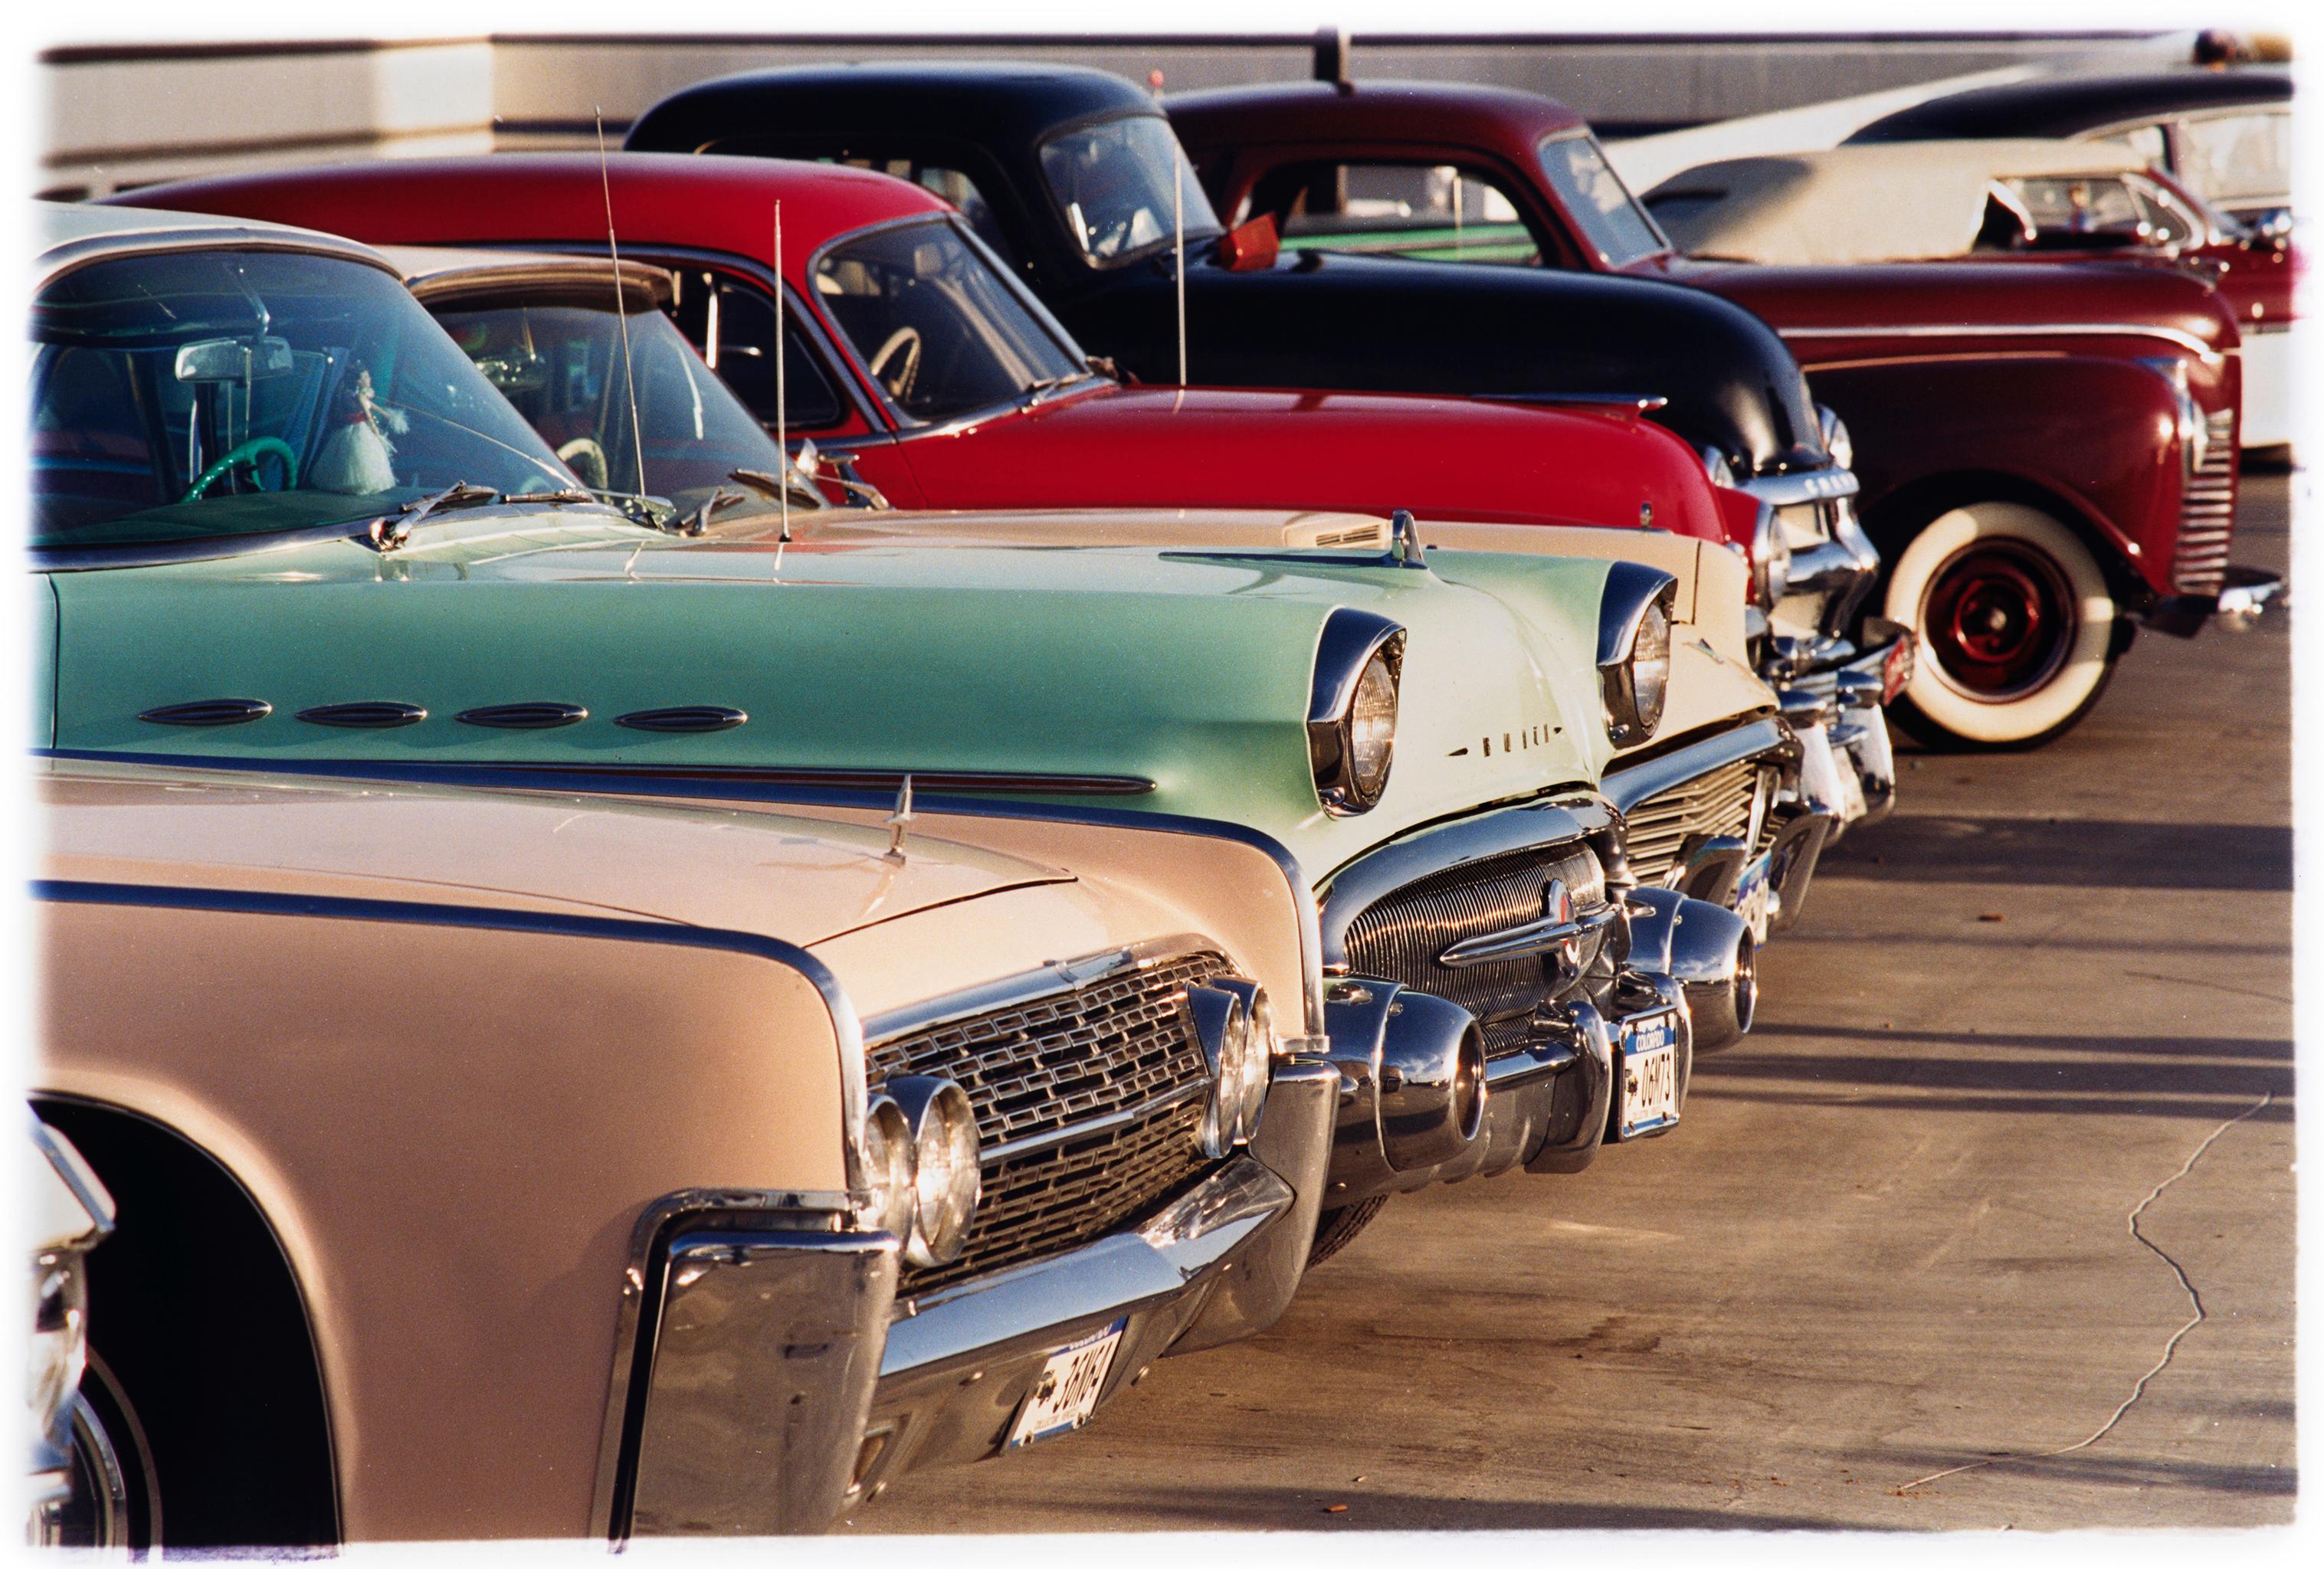 Richard Heeps Print - Cars, Las Vegas - Color Photography